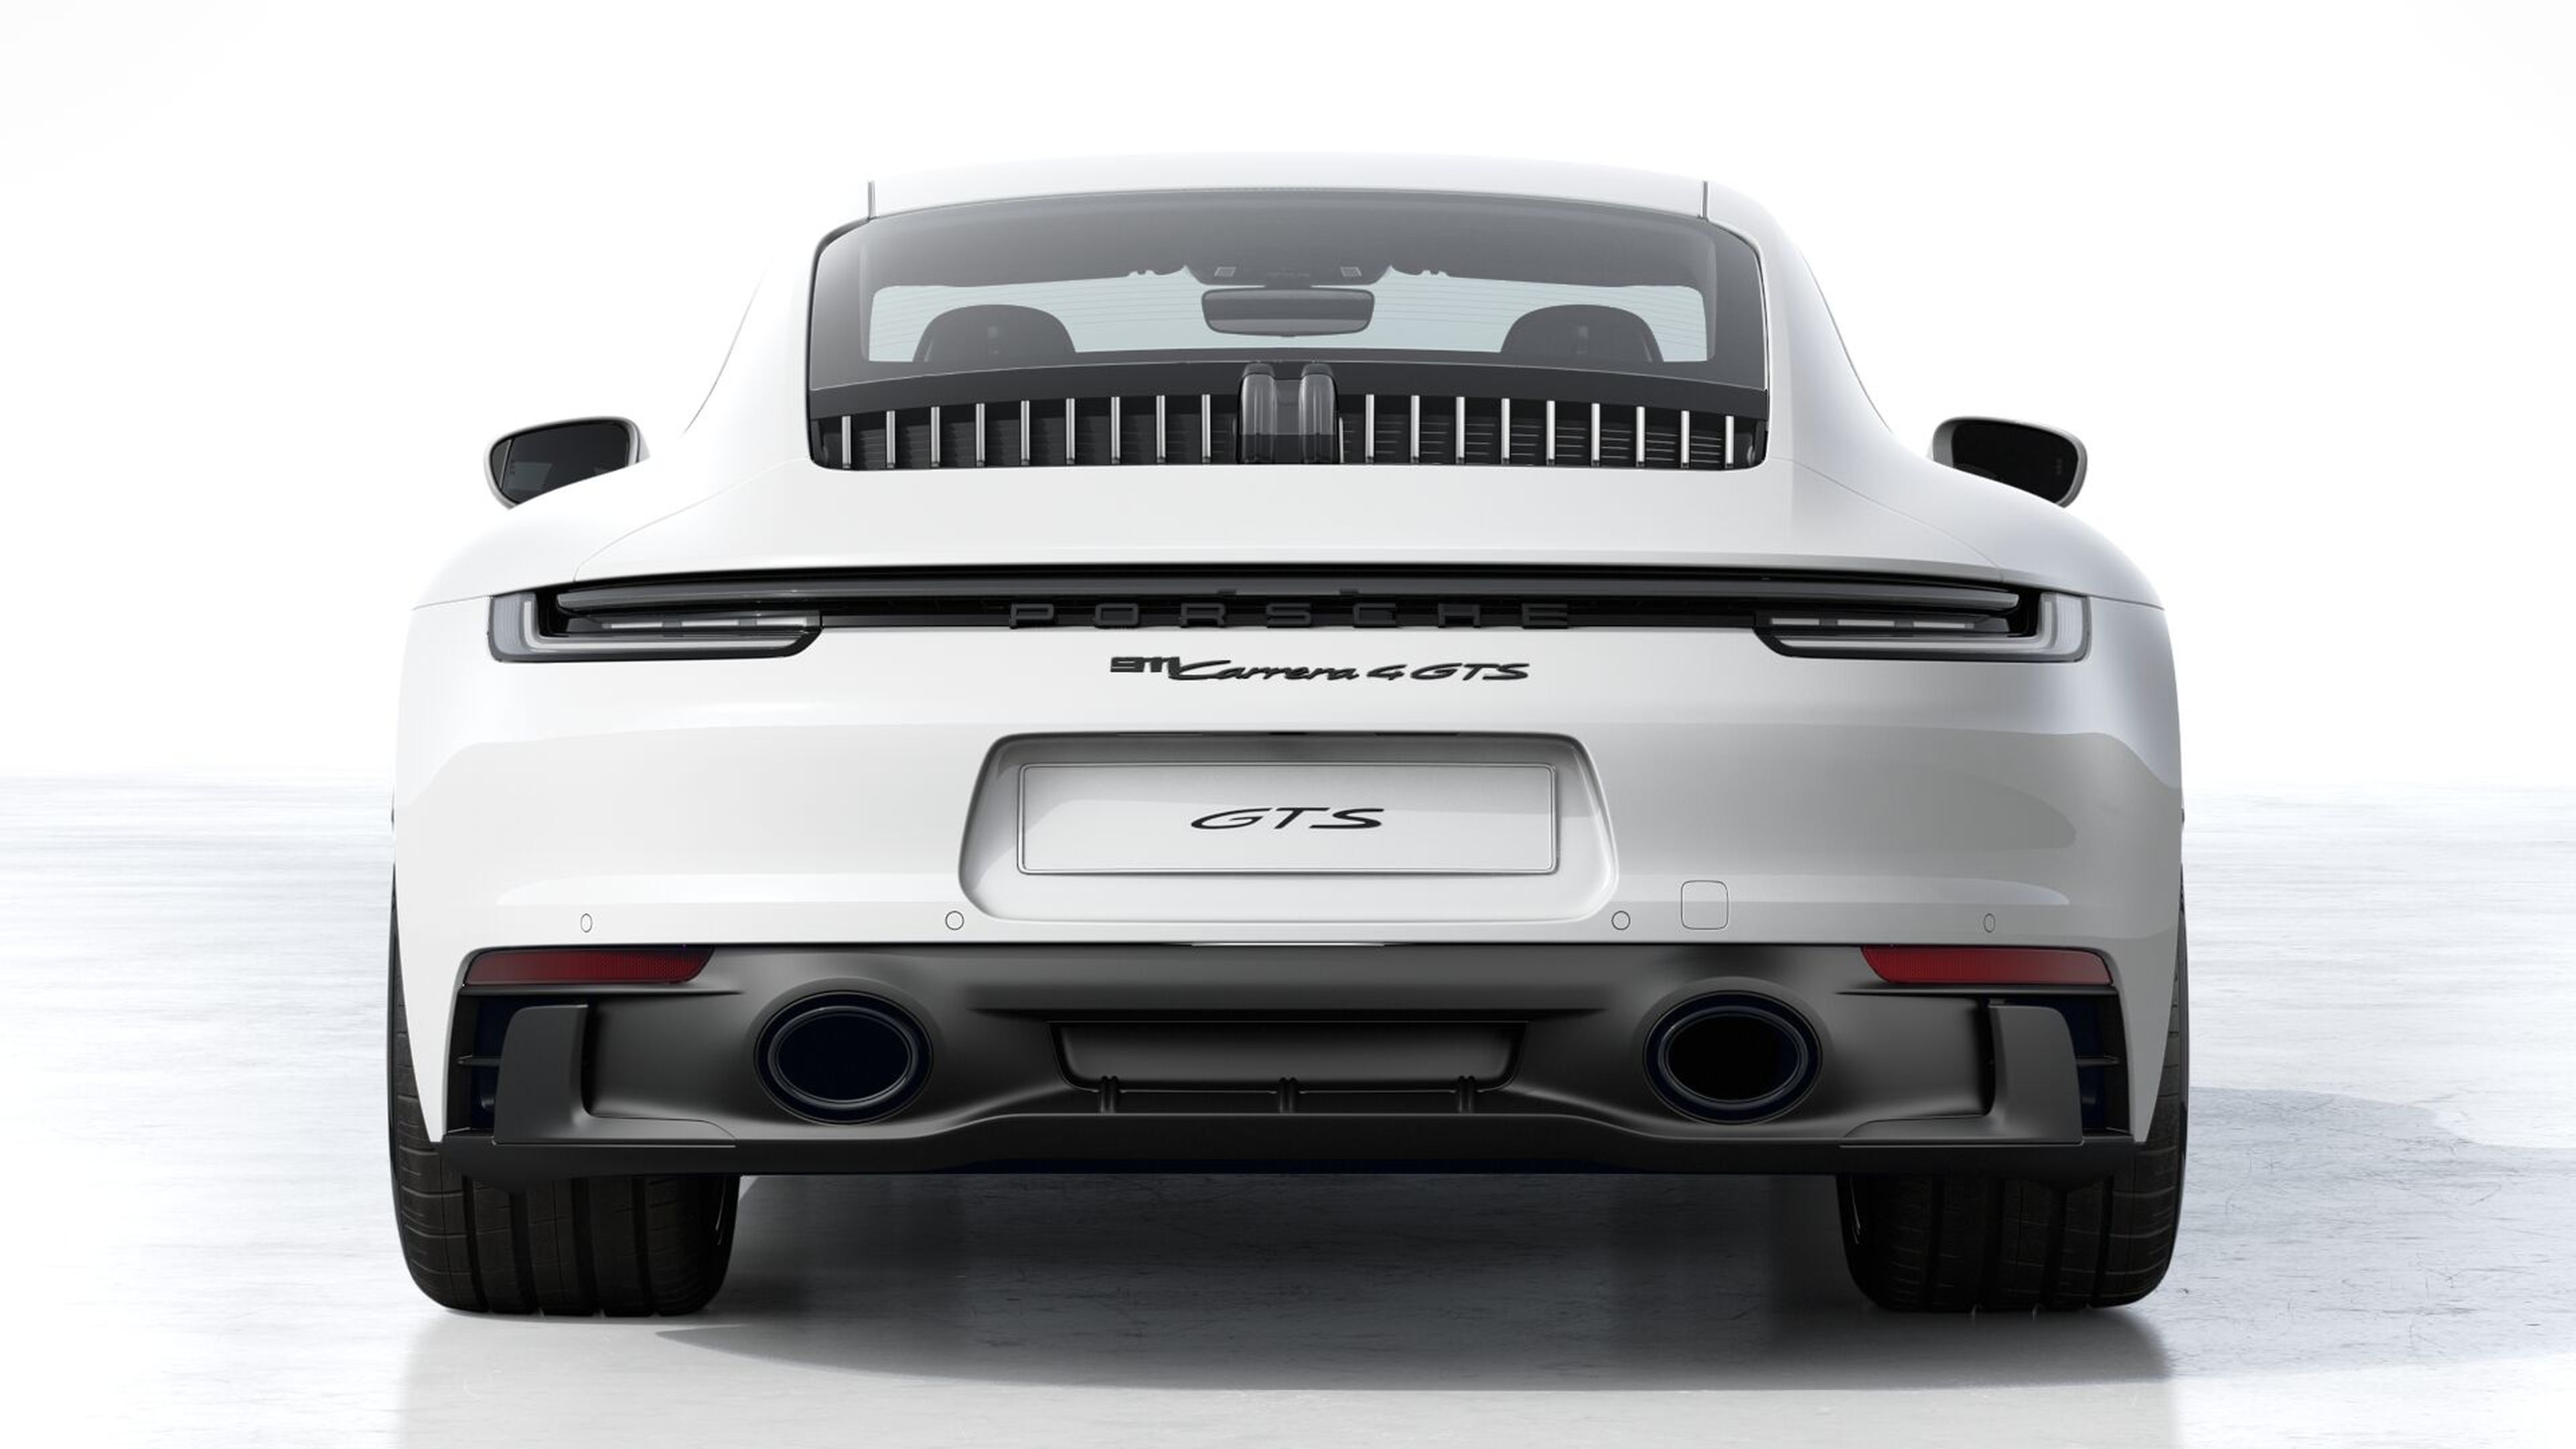 Porsche Carrera 4 GTS